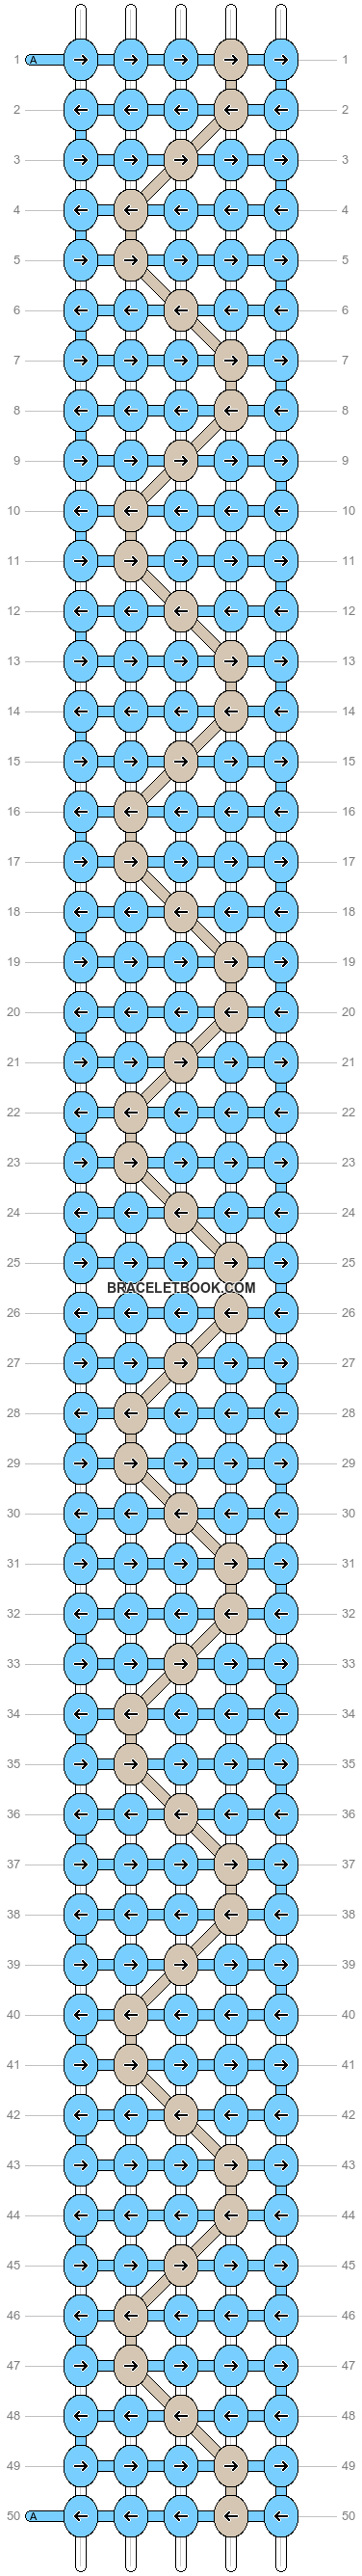 Alpha pattern #17827 variation #198513 pattern